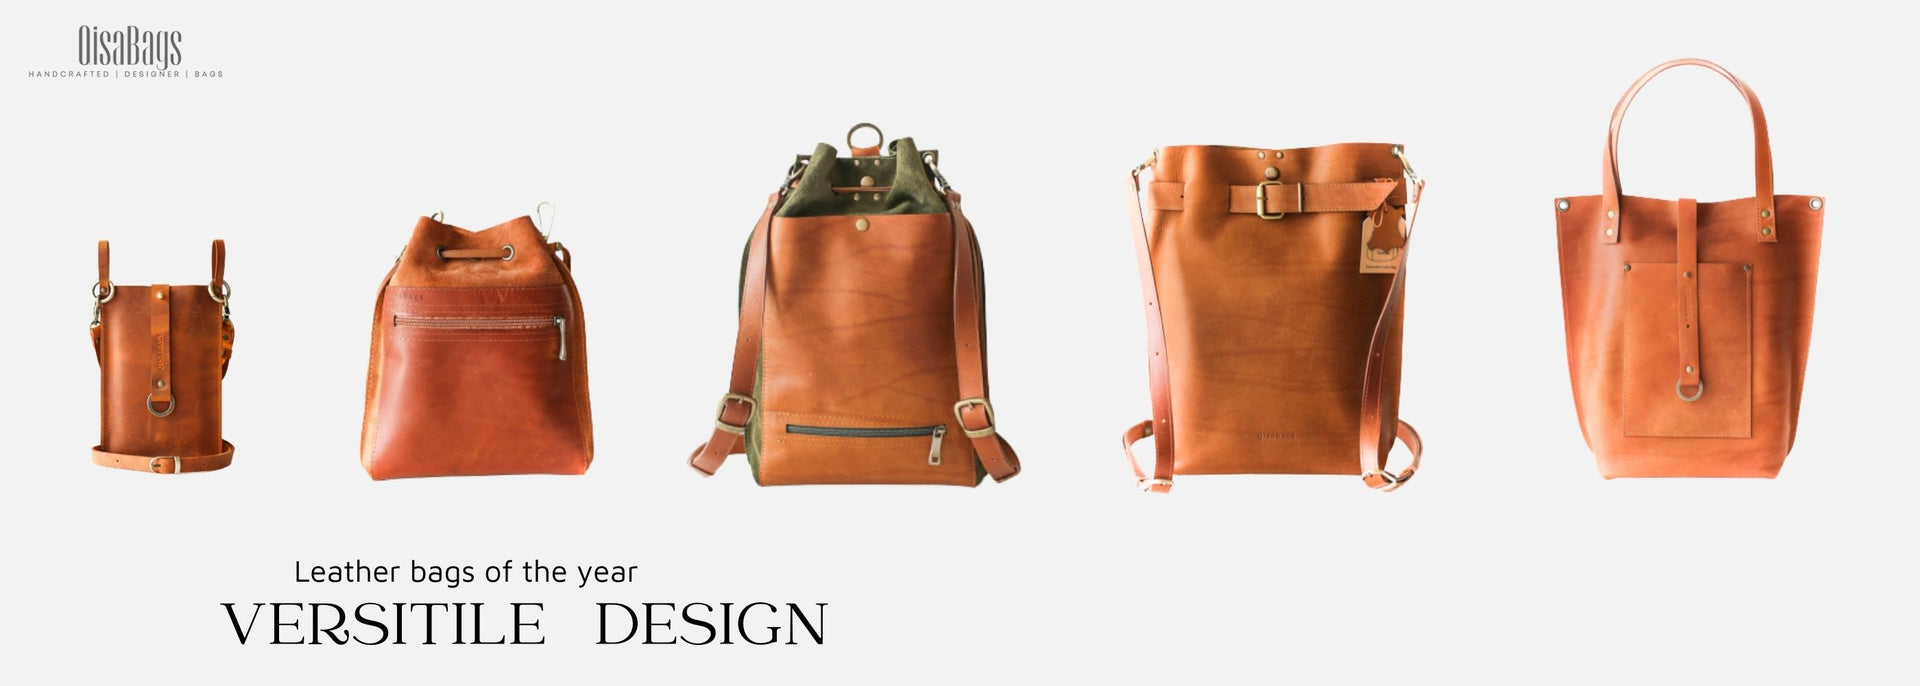 Handmade Leather Shoulder Bag for Women Embossed Orange 